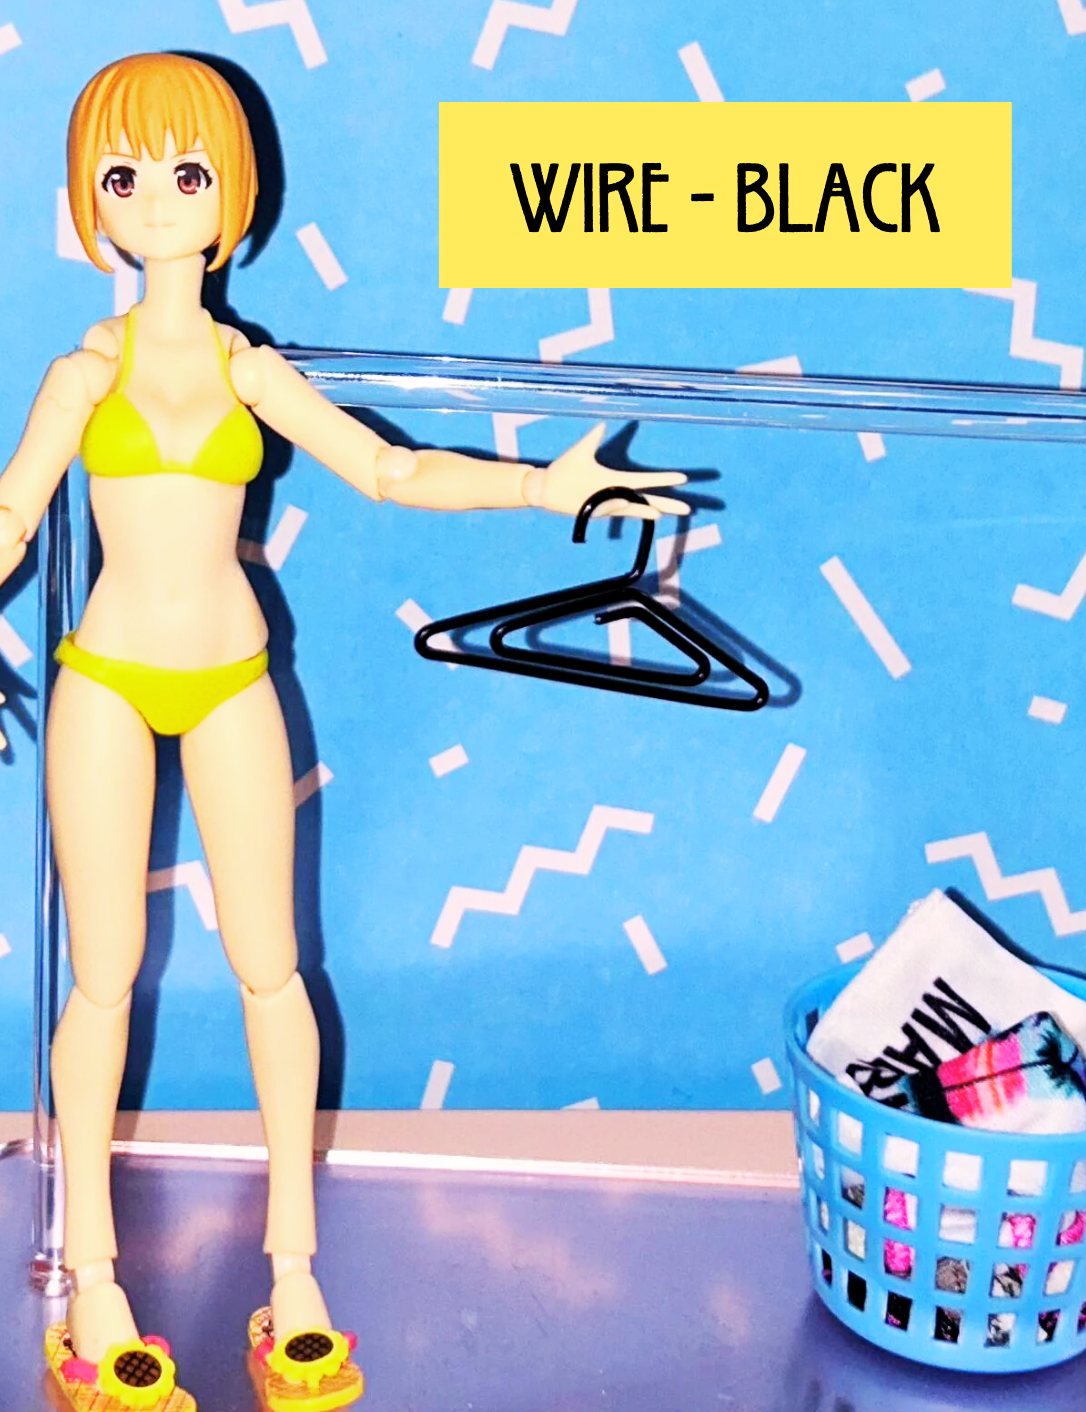 12th Scale Black Wire Hanger